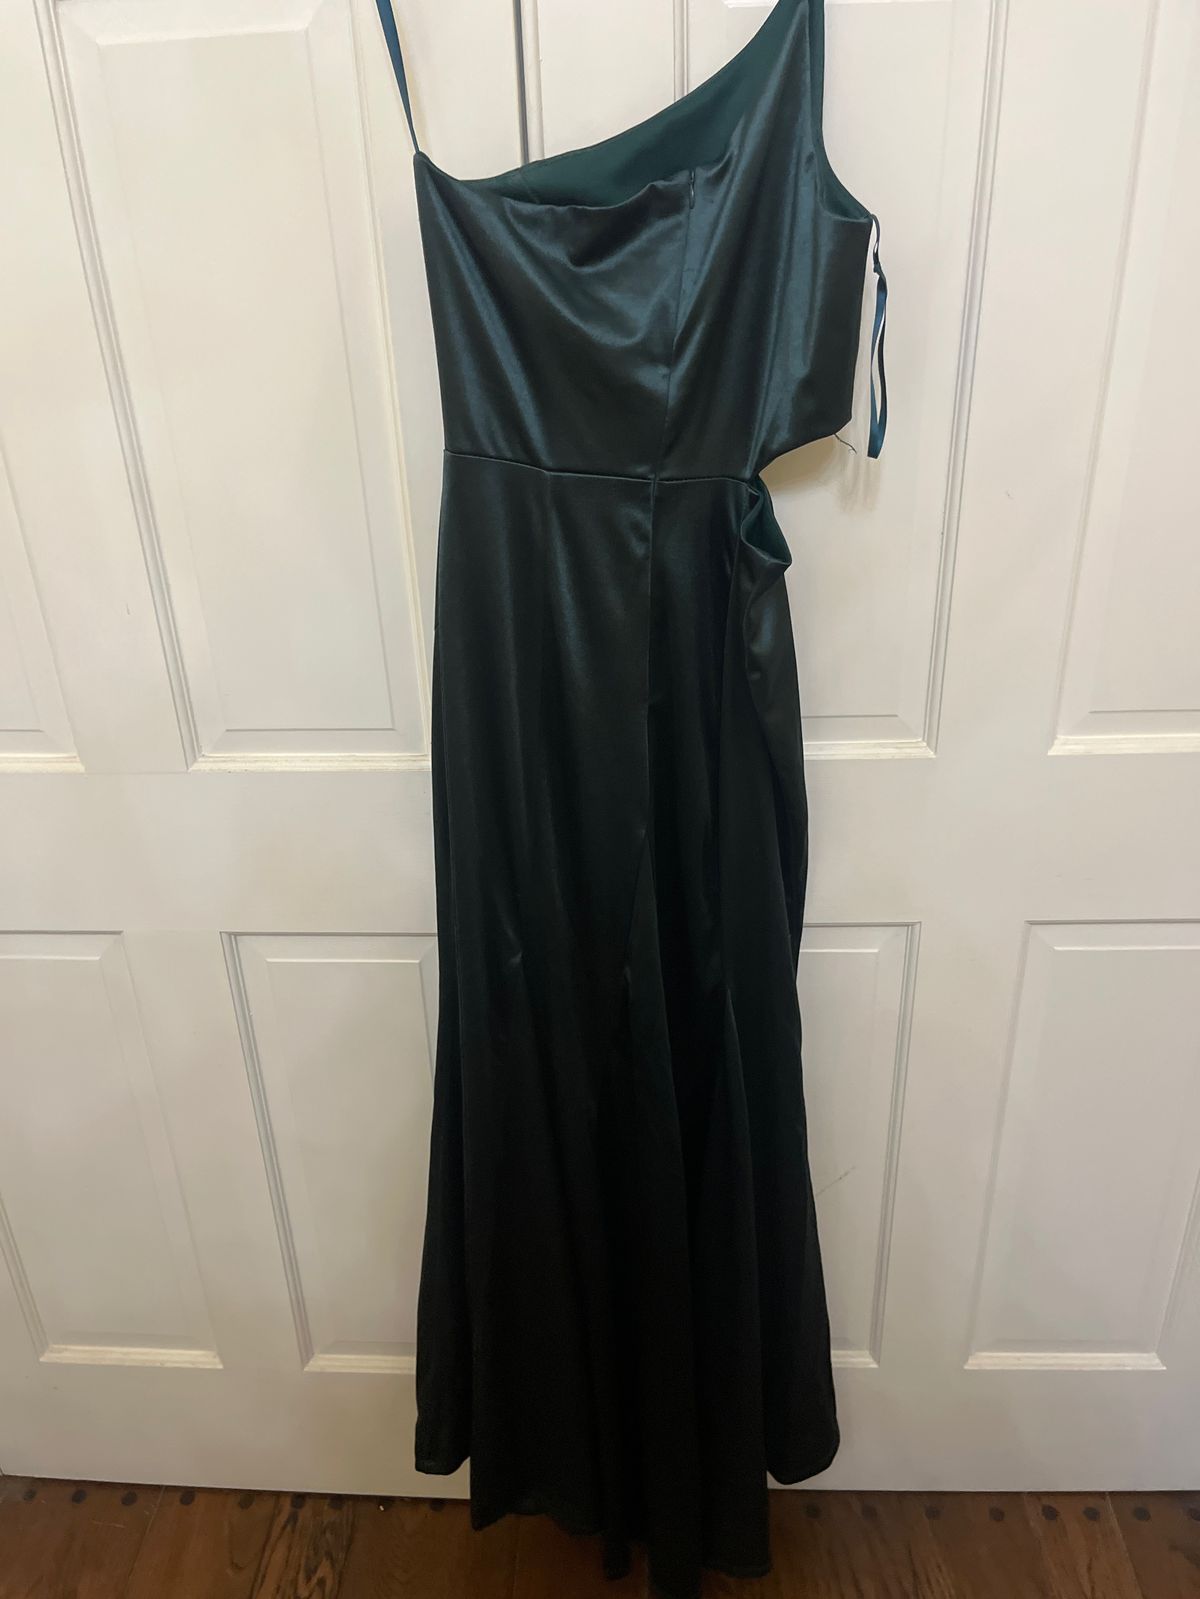 Size 4 Prom One Shoulder Green Side Slit Dress on Queenly